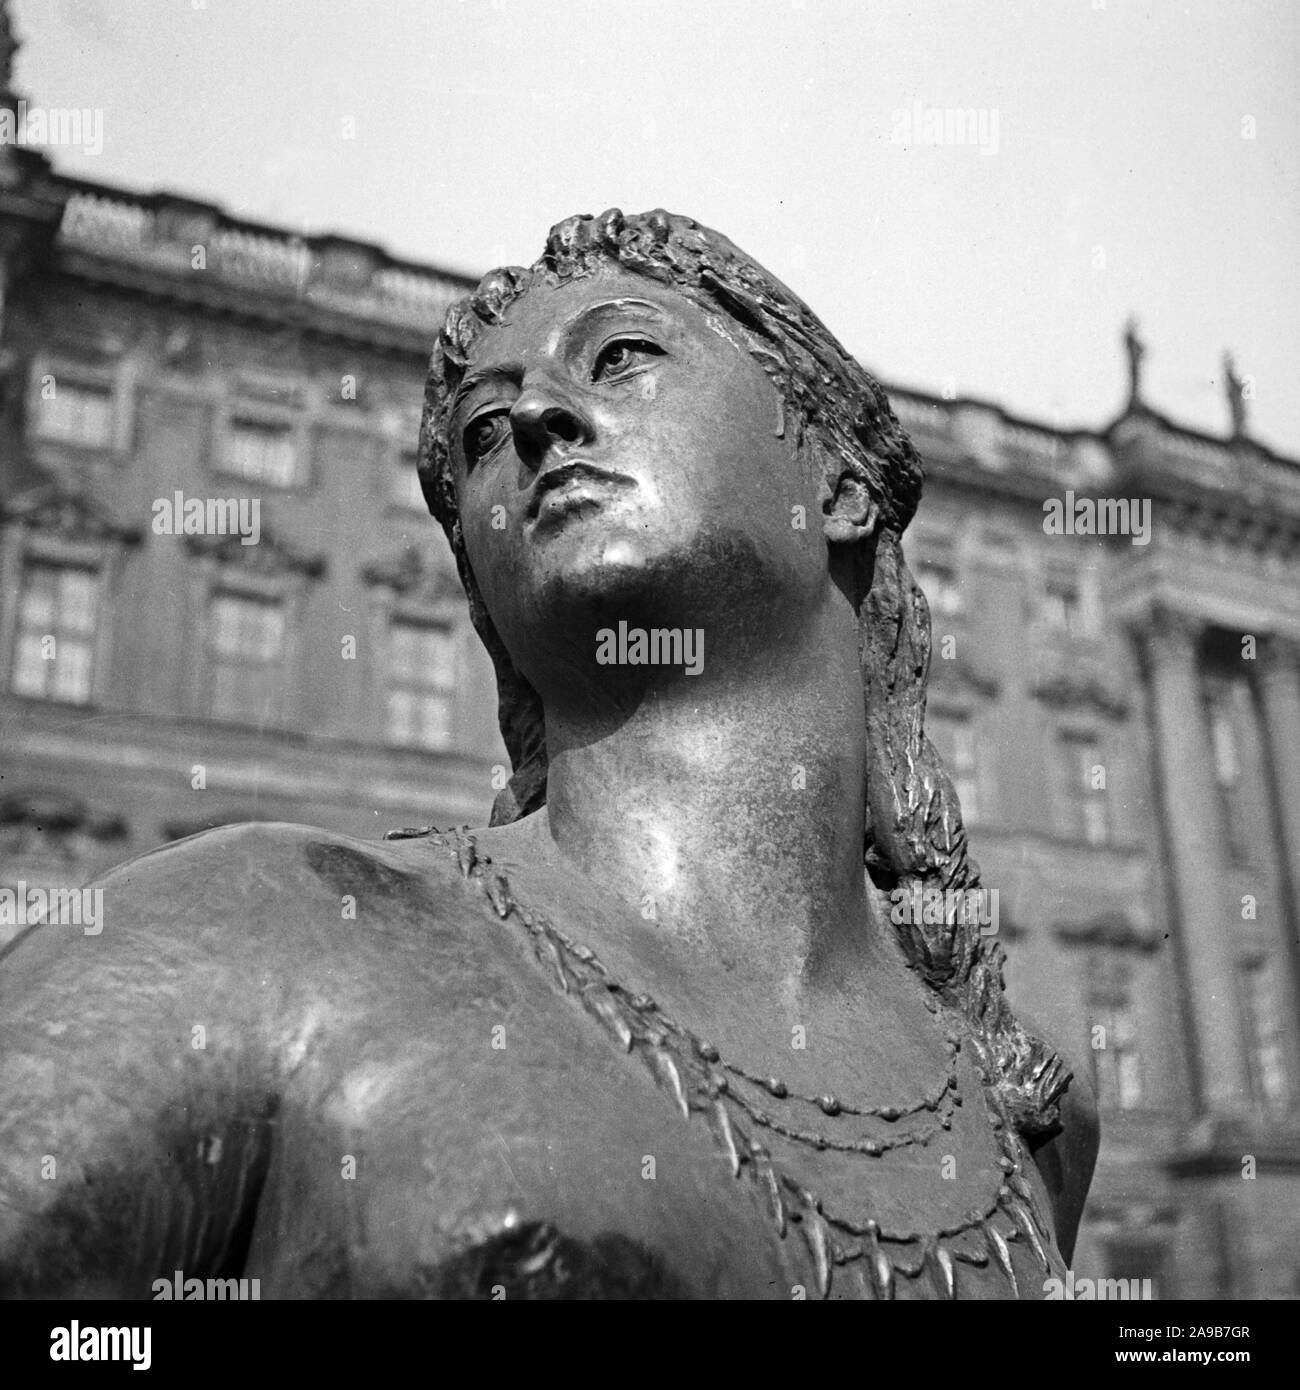 Dettaglio di una scultura a una fontana a Brema, Germania 1930s. Foto Stock